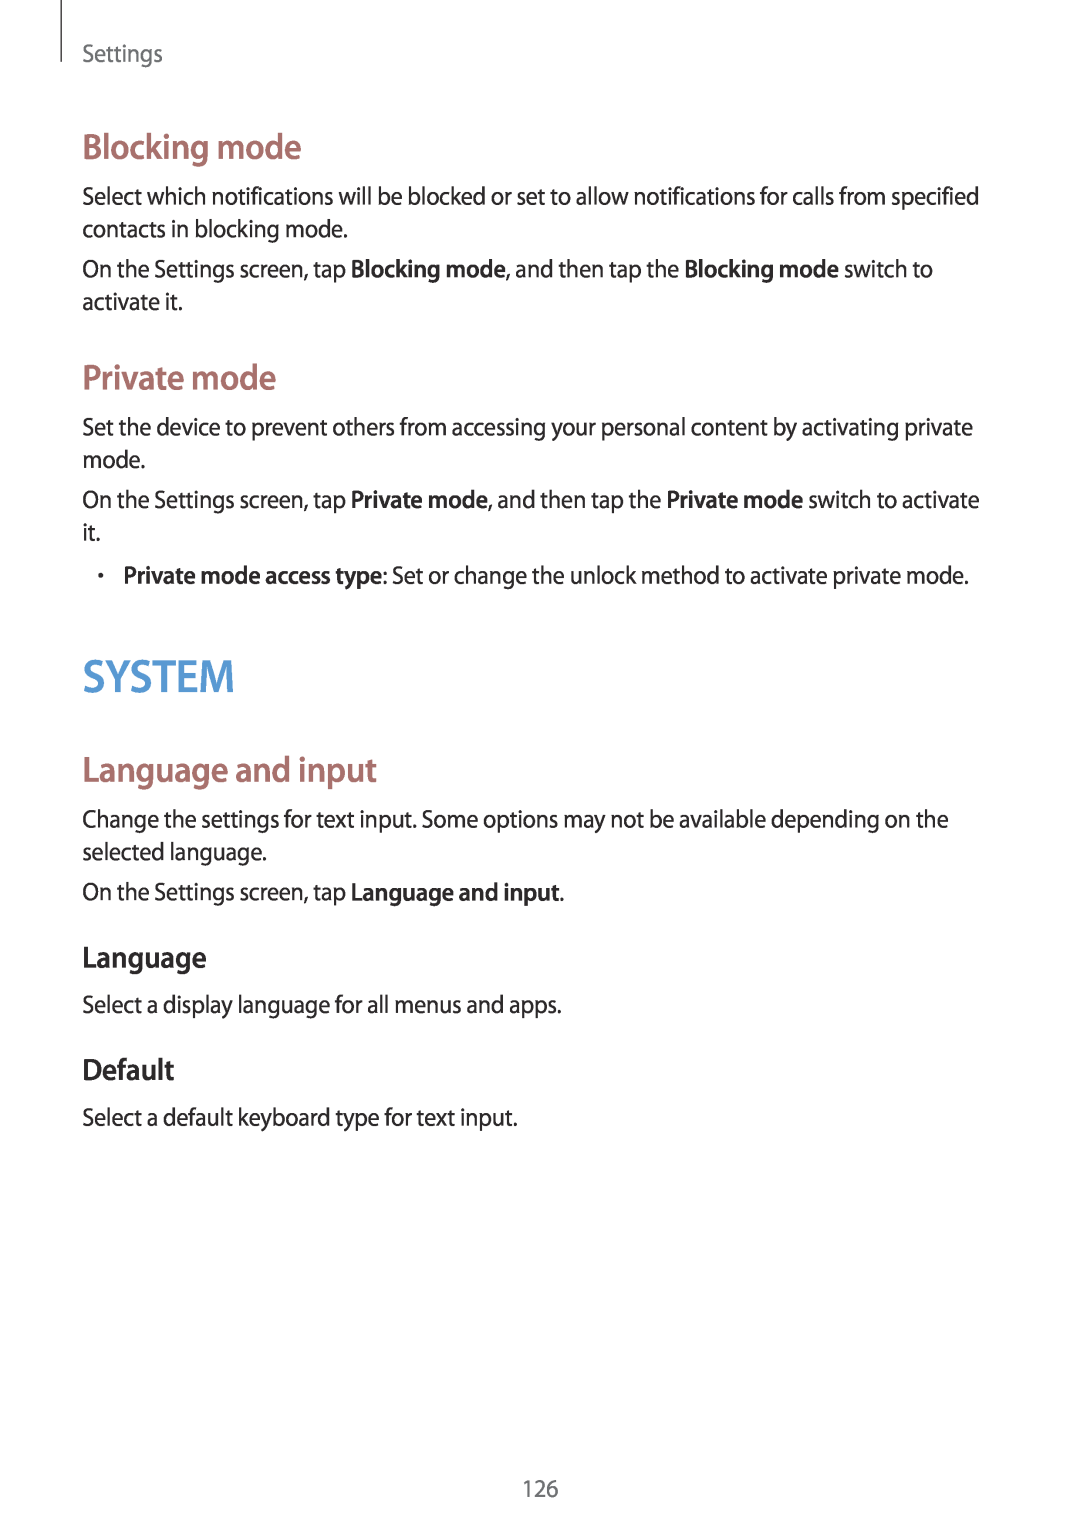 Samsung SM-A700FZDASEB, SM-A700FZKADBT manual System, Blocking mode, Private mode, Language and input, Default, Settings 